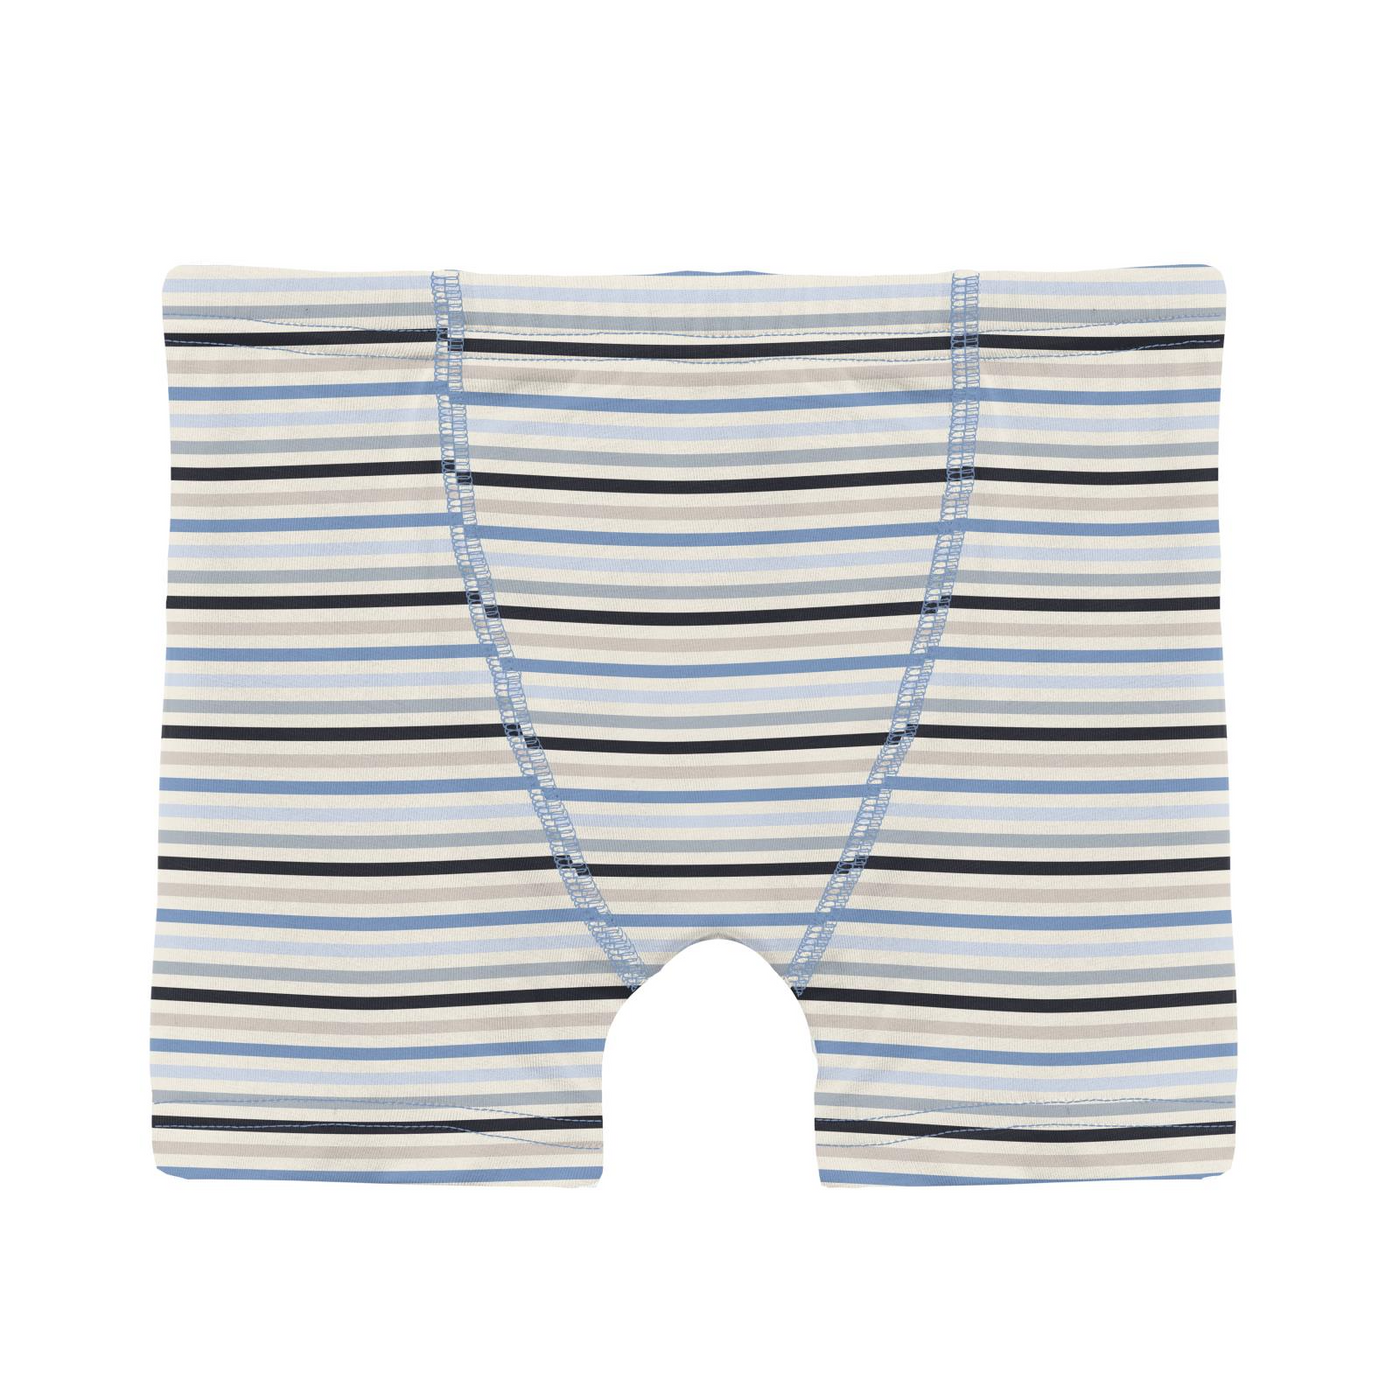 Kickee Pants Boxer Brief Set of 3: Pearl Blue Baby Bumblebee, Natural & Rhyme Stripe  (Ships 5/15-6/15)